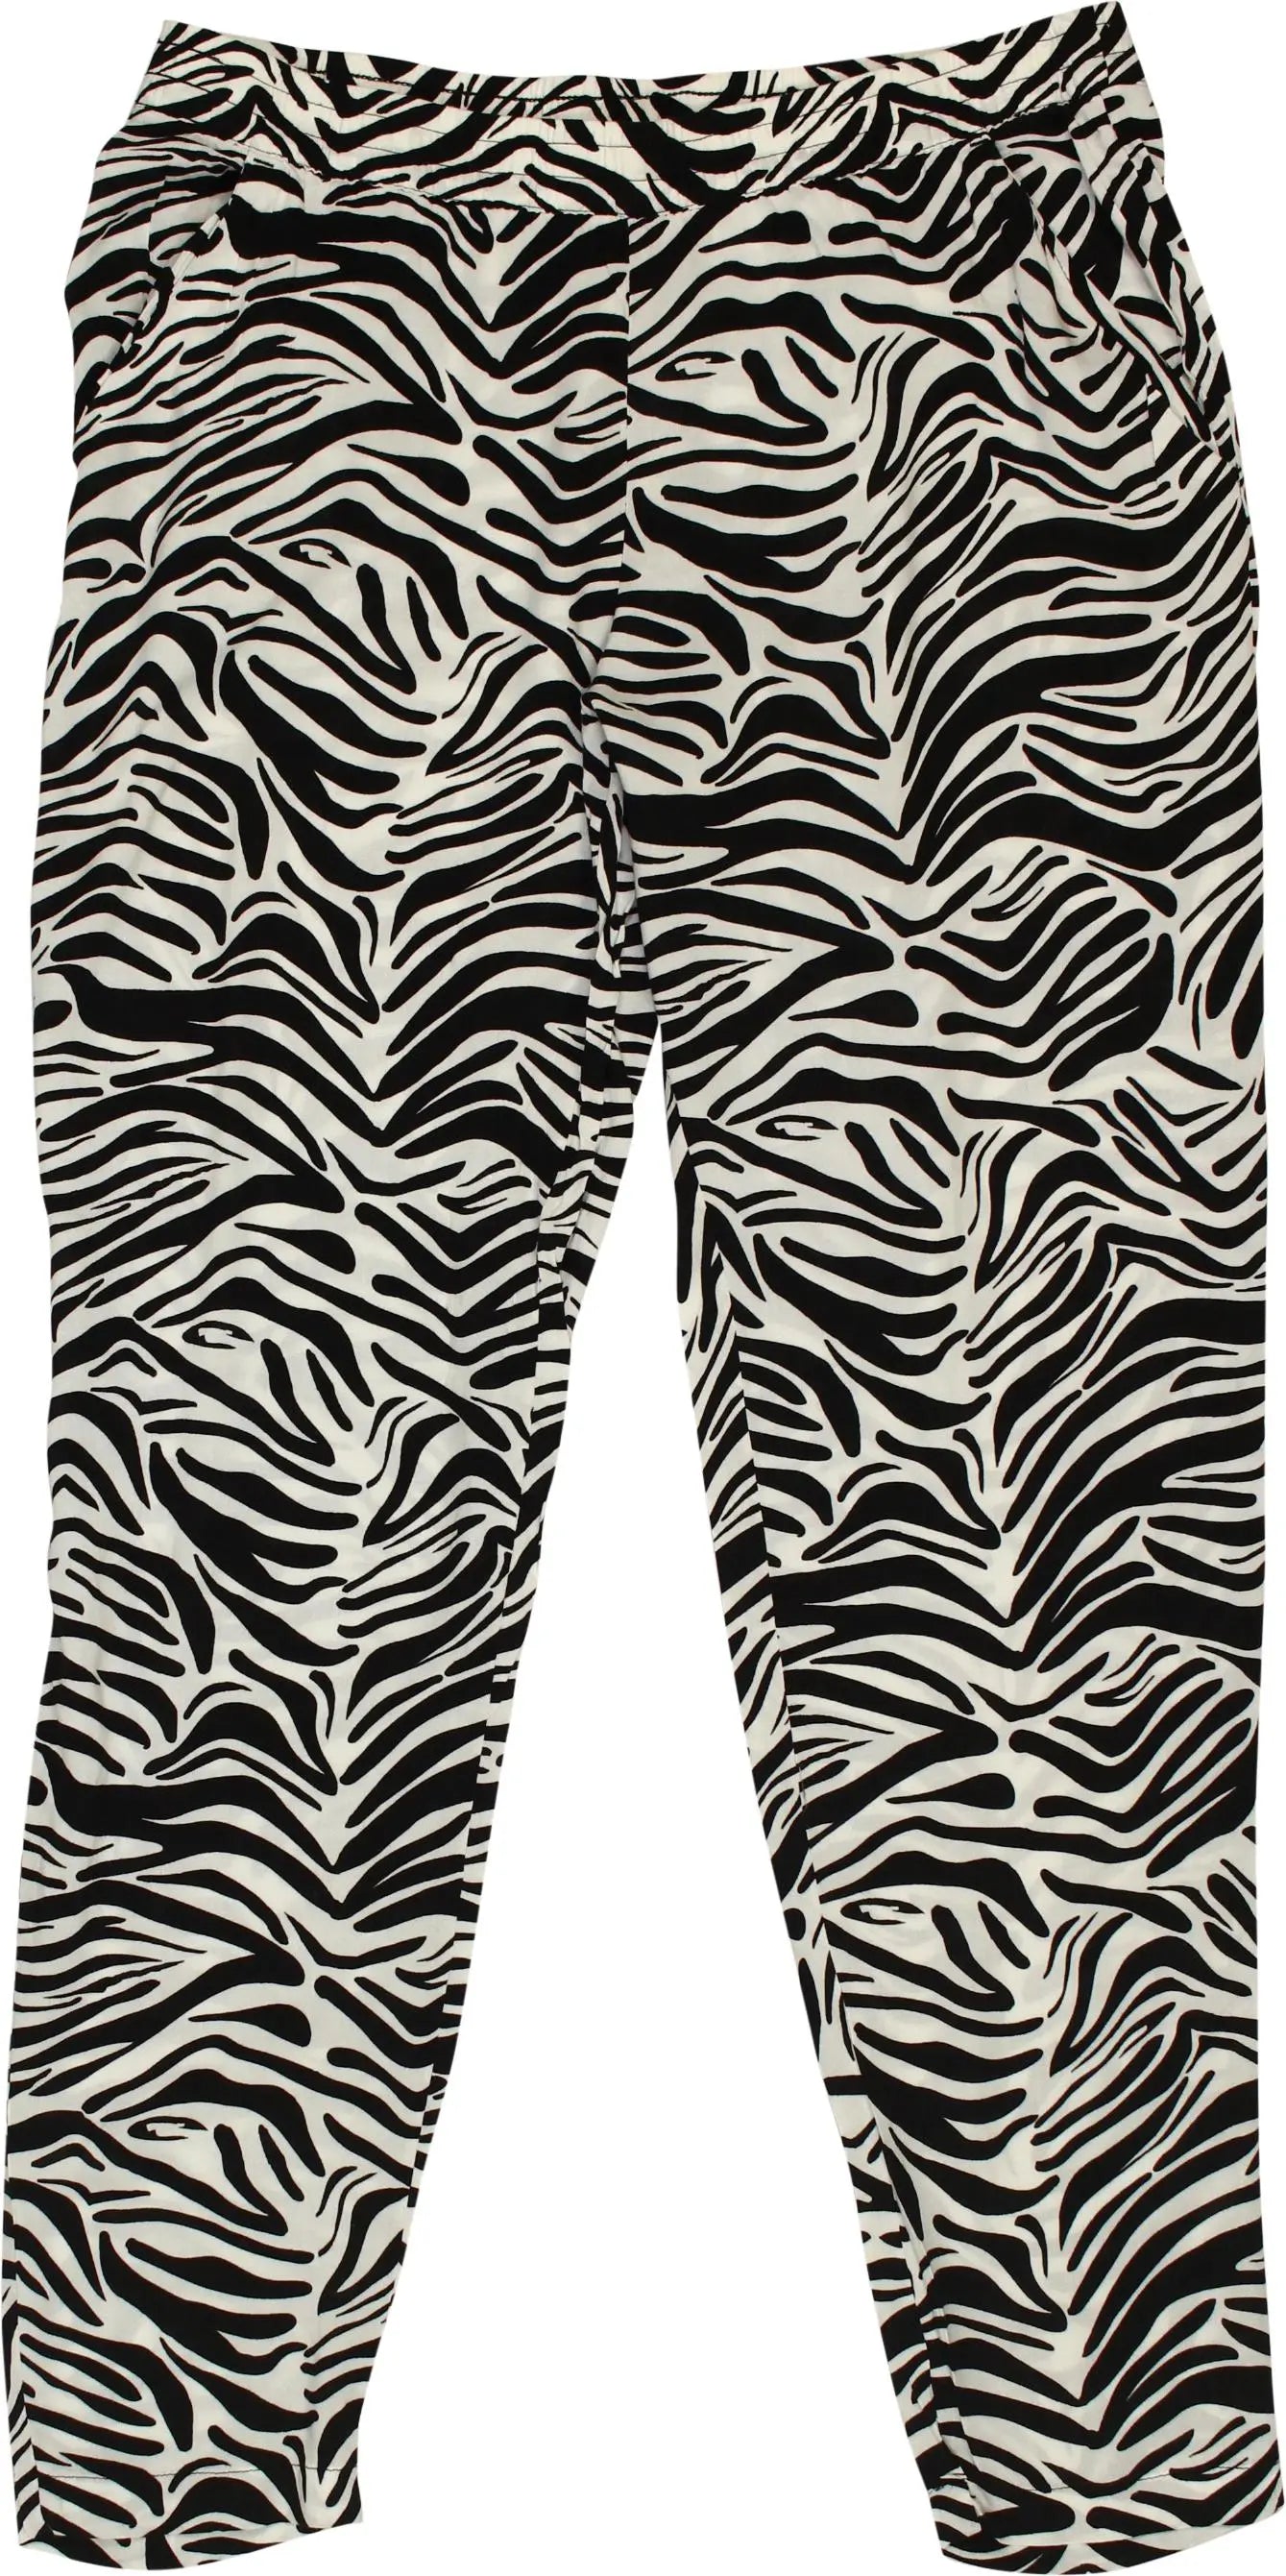 H&M - Zebra Pants- ThriftTale.com - Vintage and second handclothing